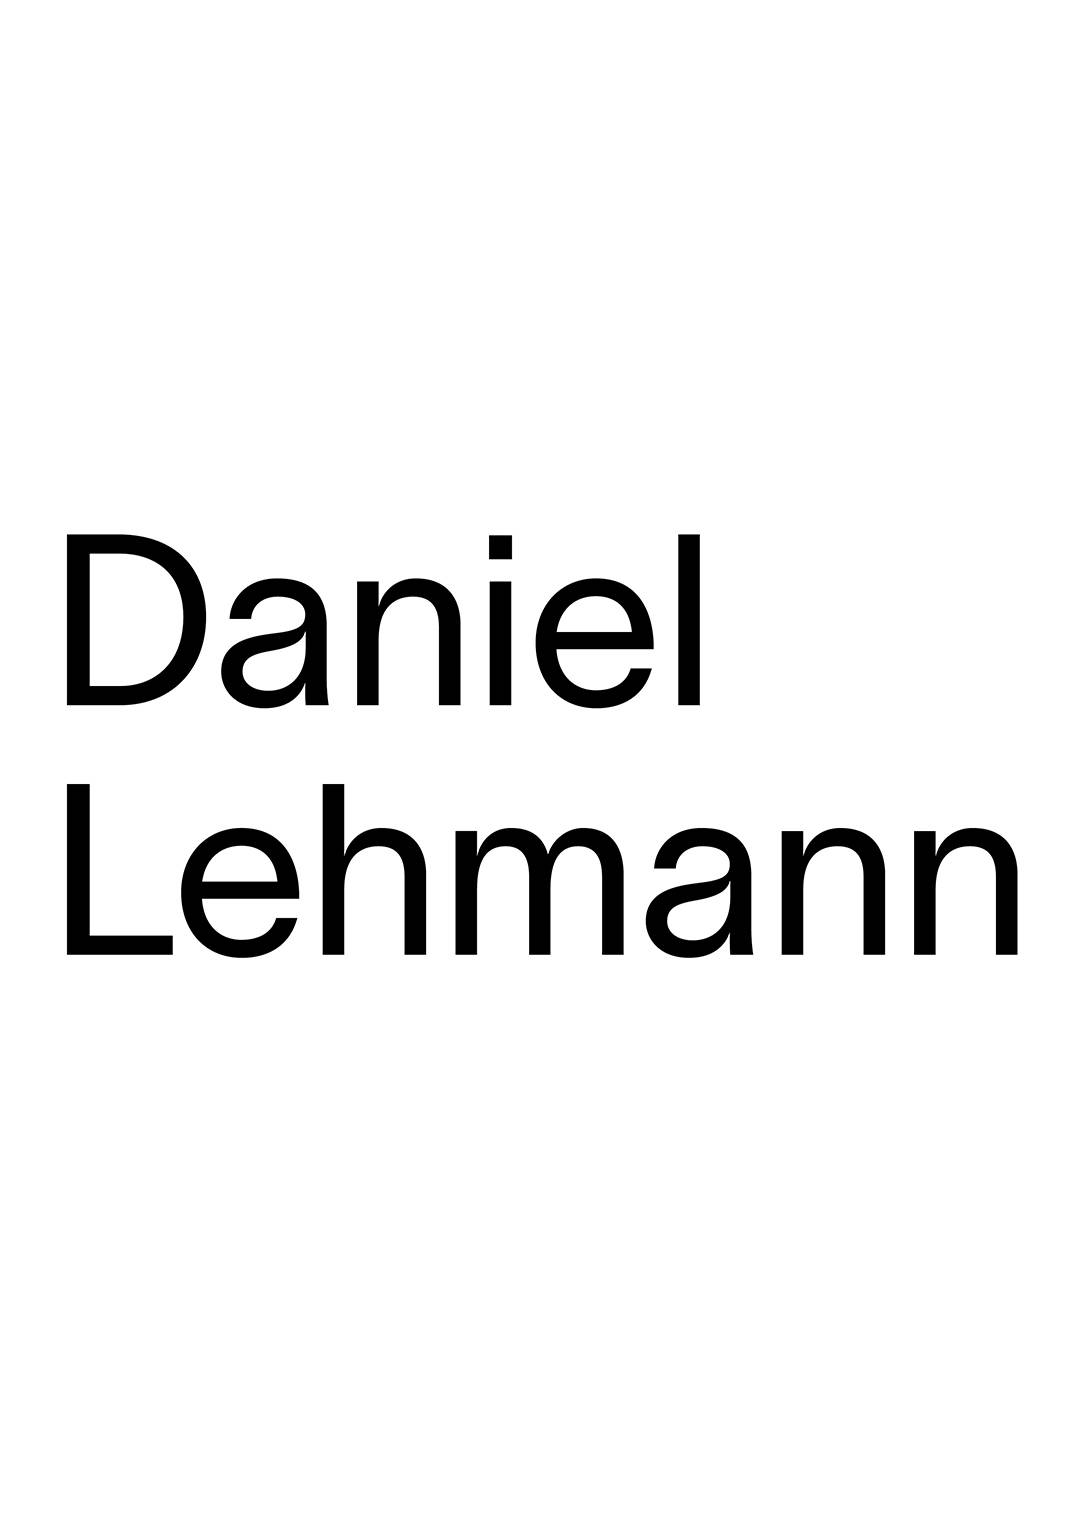 dl_daniel_lehmann3.jpg